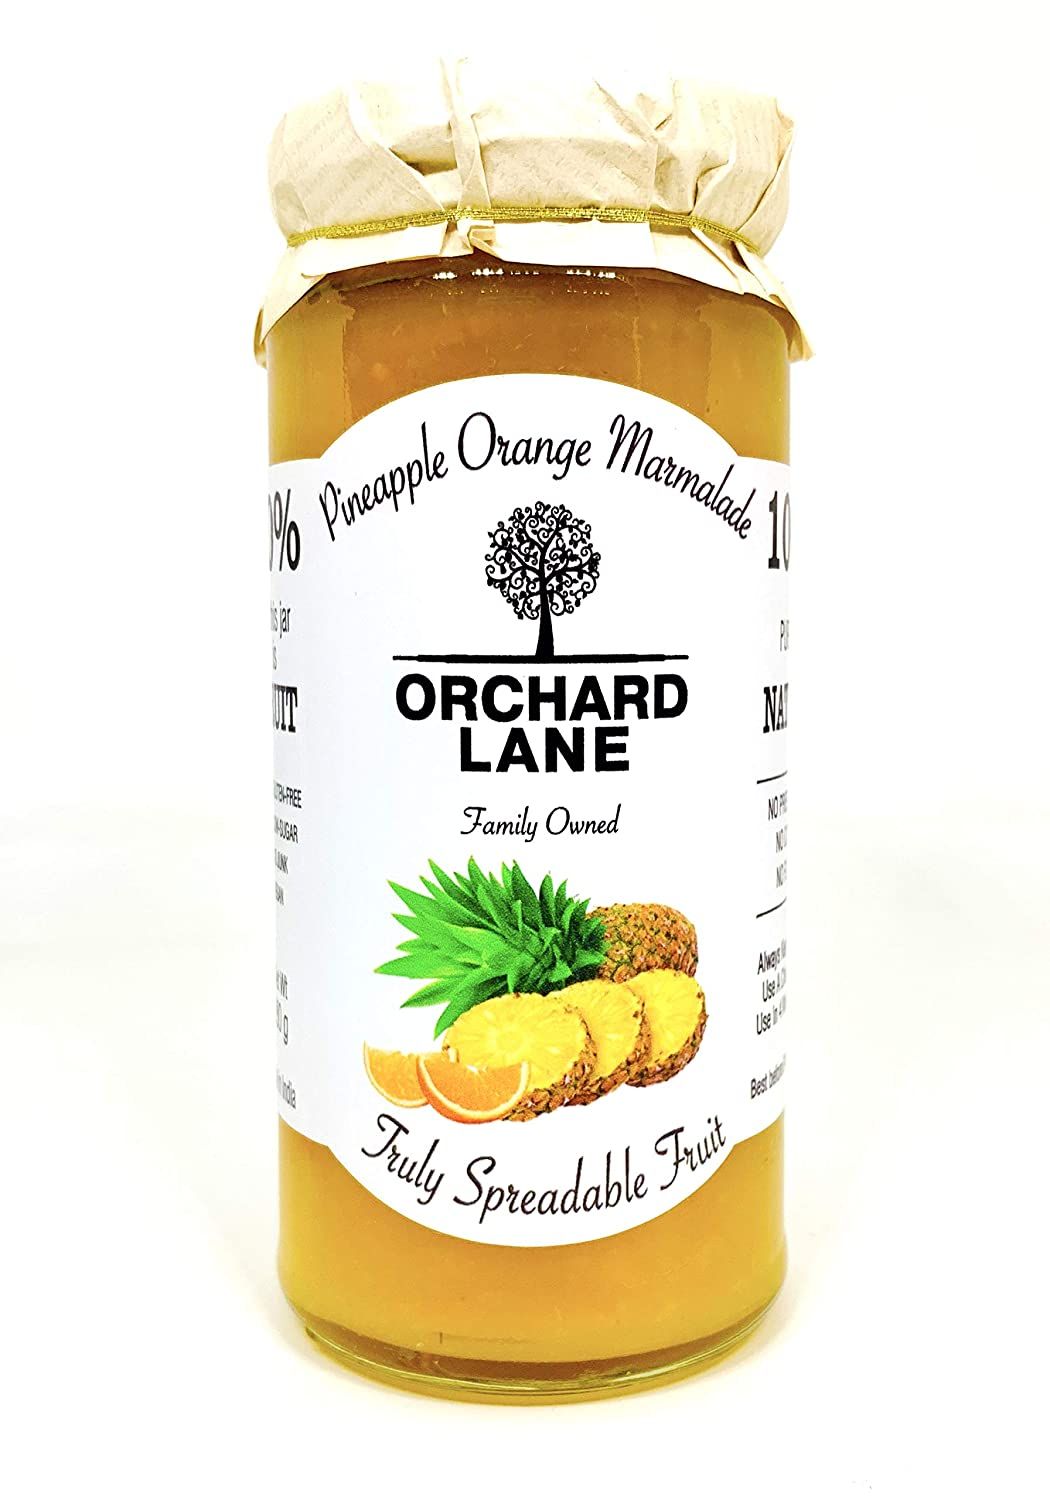 Orchard Lane Pineapple Orange Marmalade Image